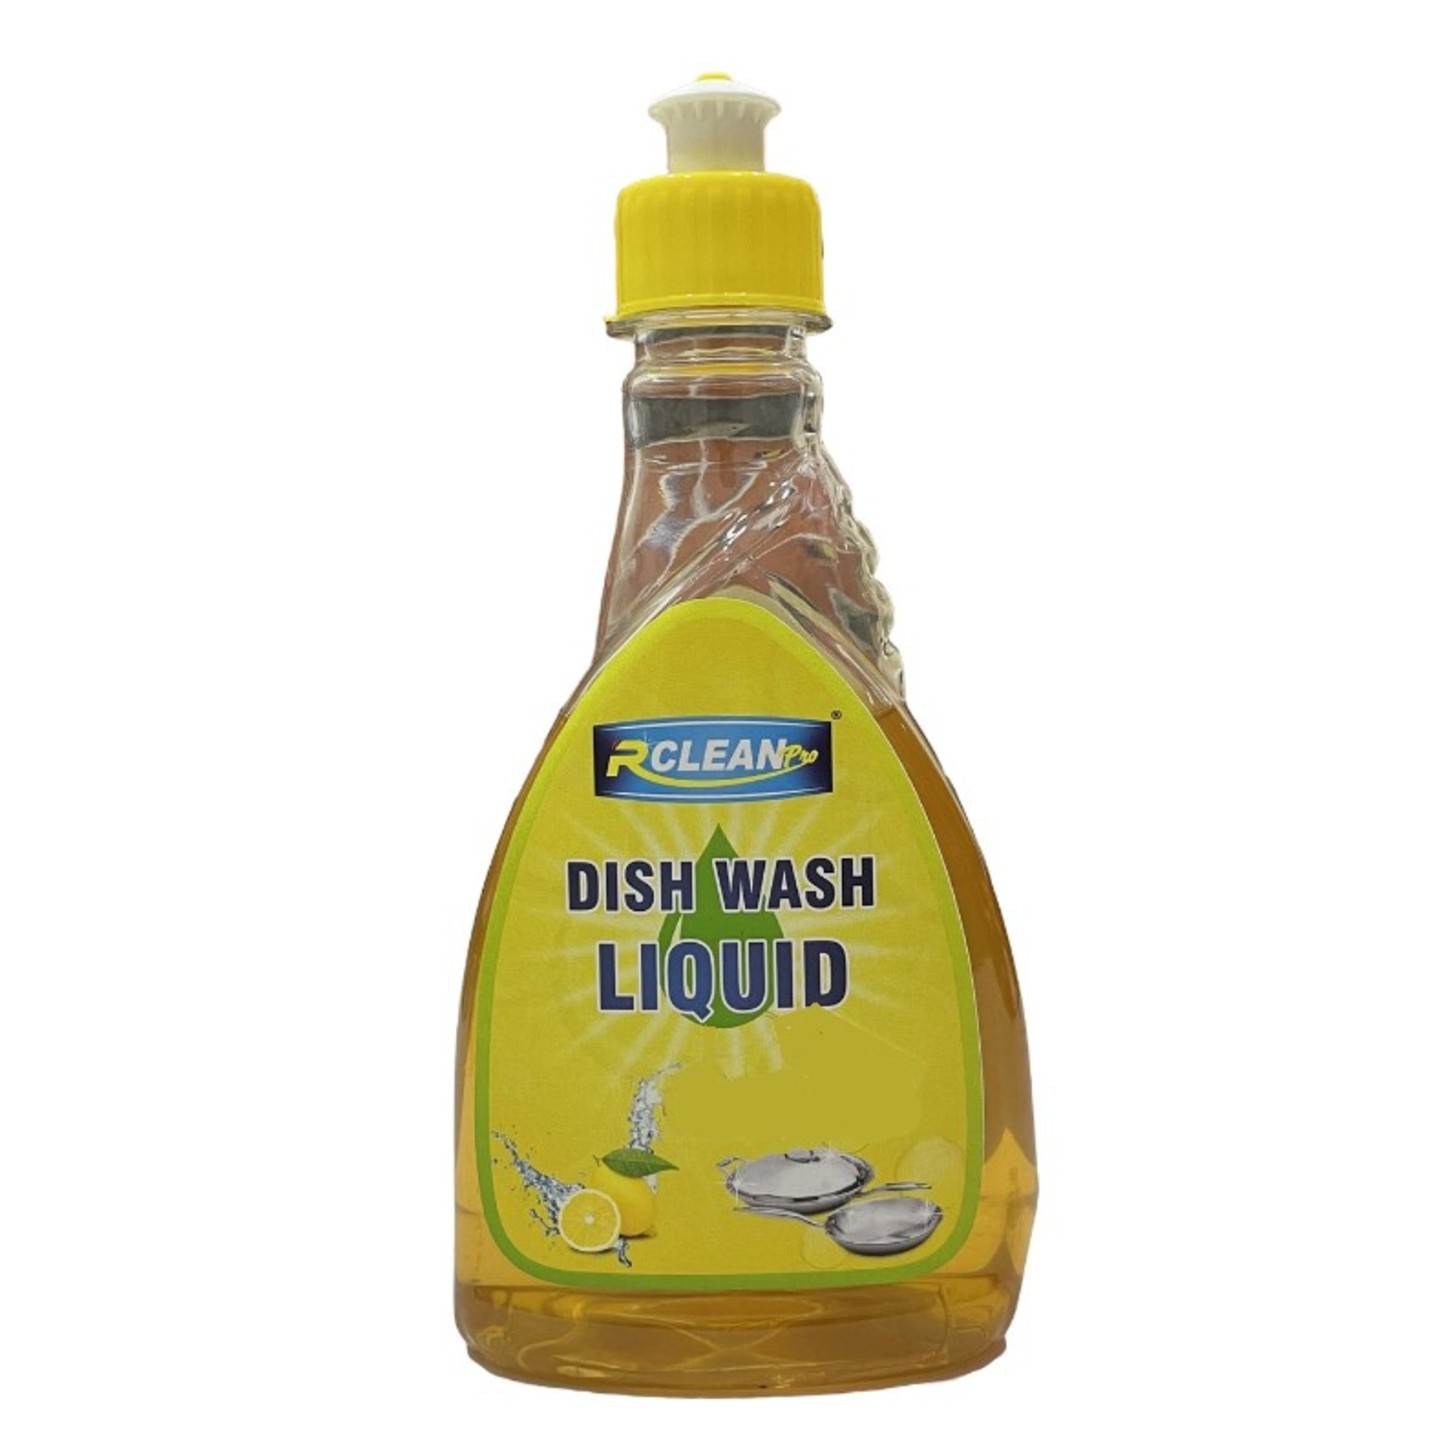 RCLEAN PRO Dish Wash Liquid Lemon 300 ML